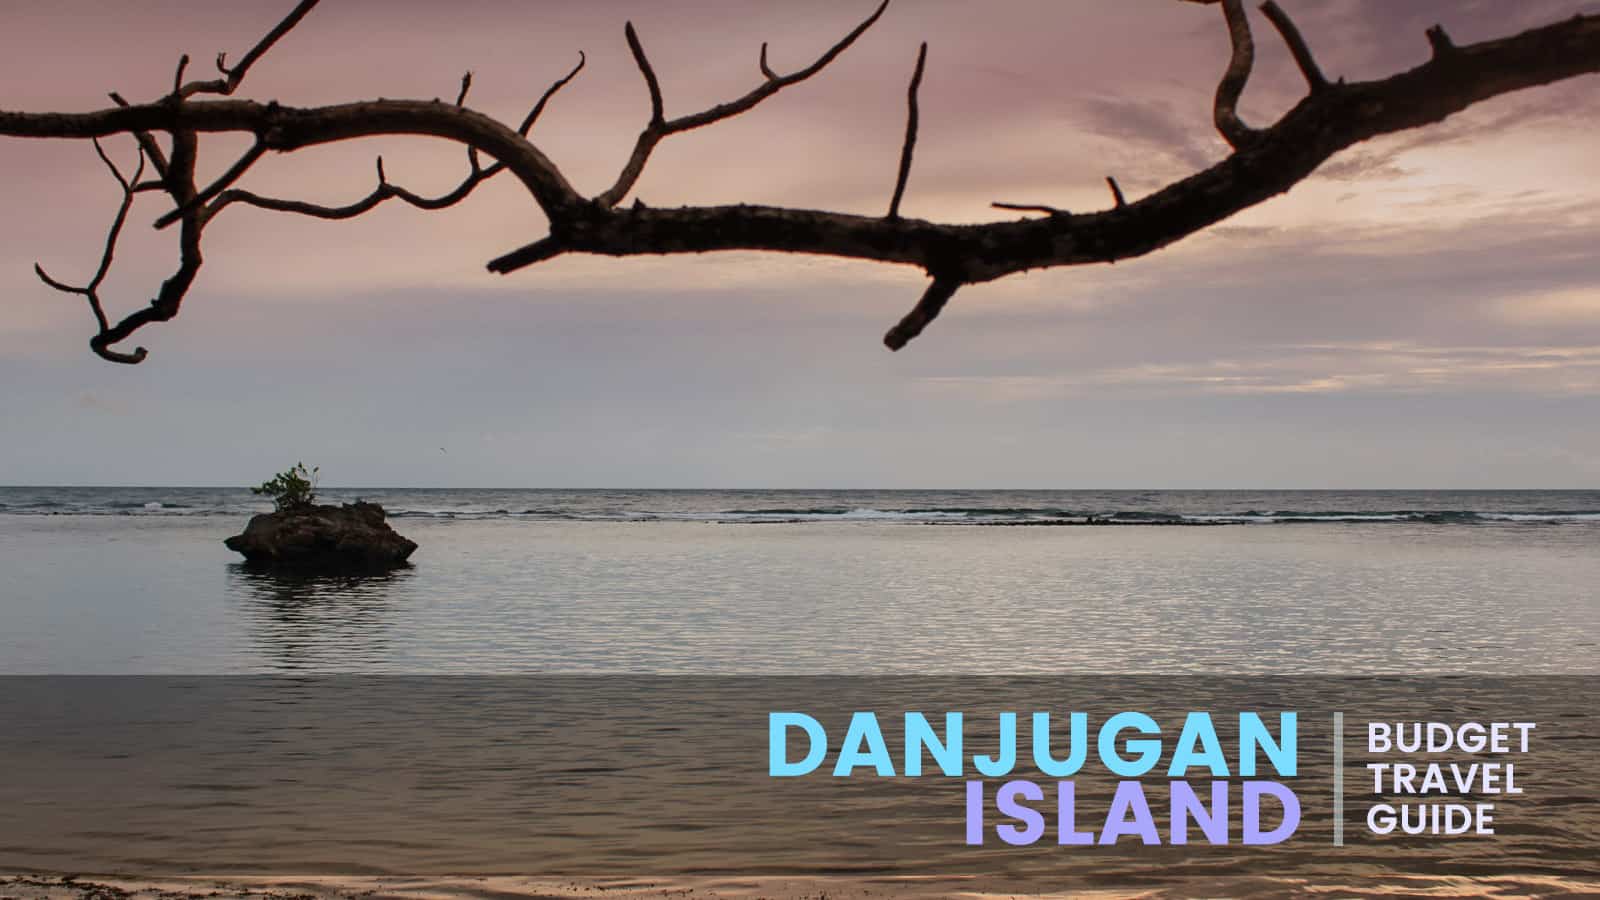 Danjugan Island, Negros Occidental: Budget Travel Guide